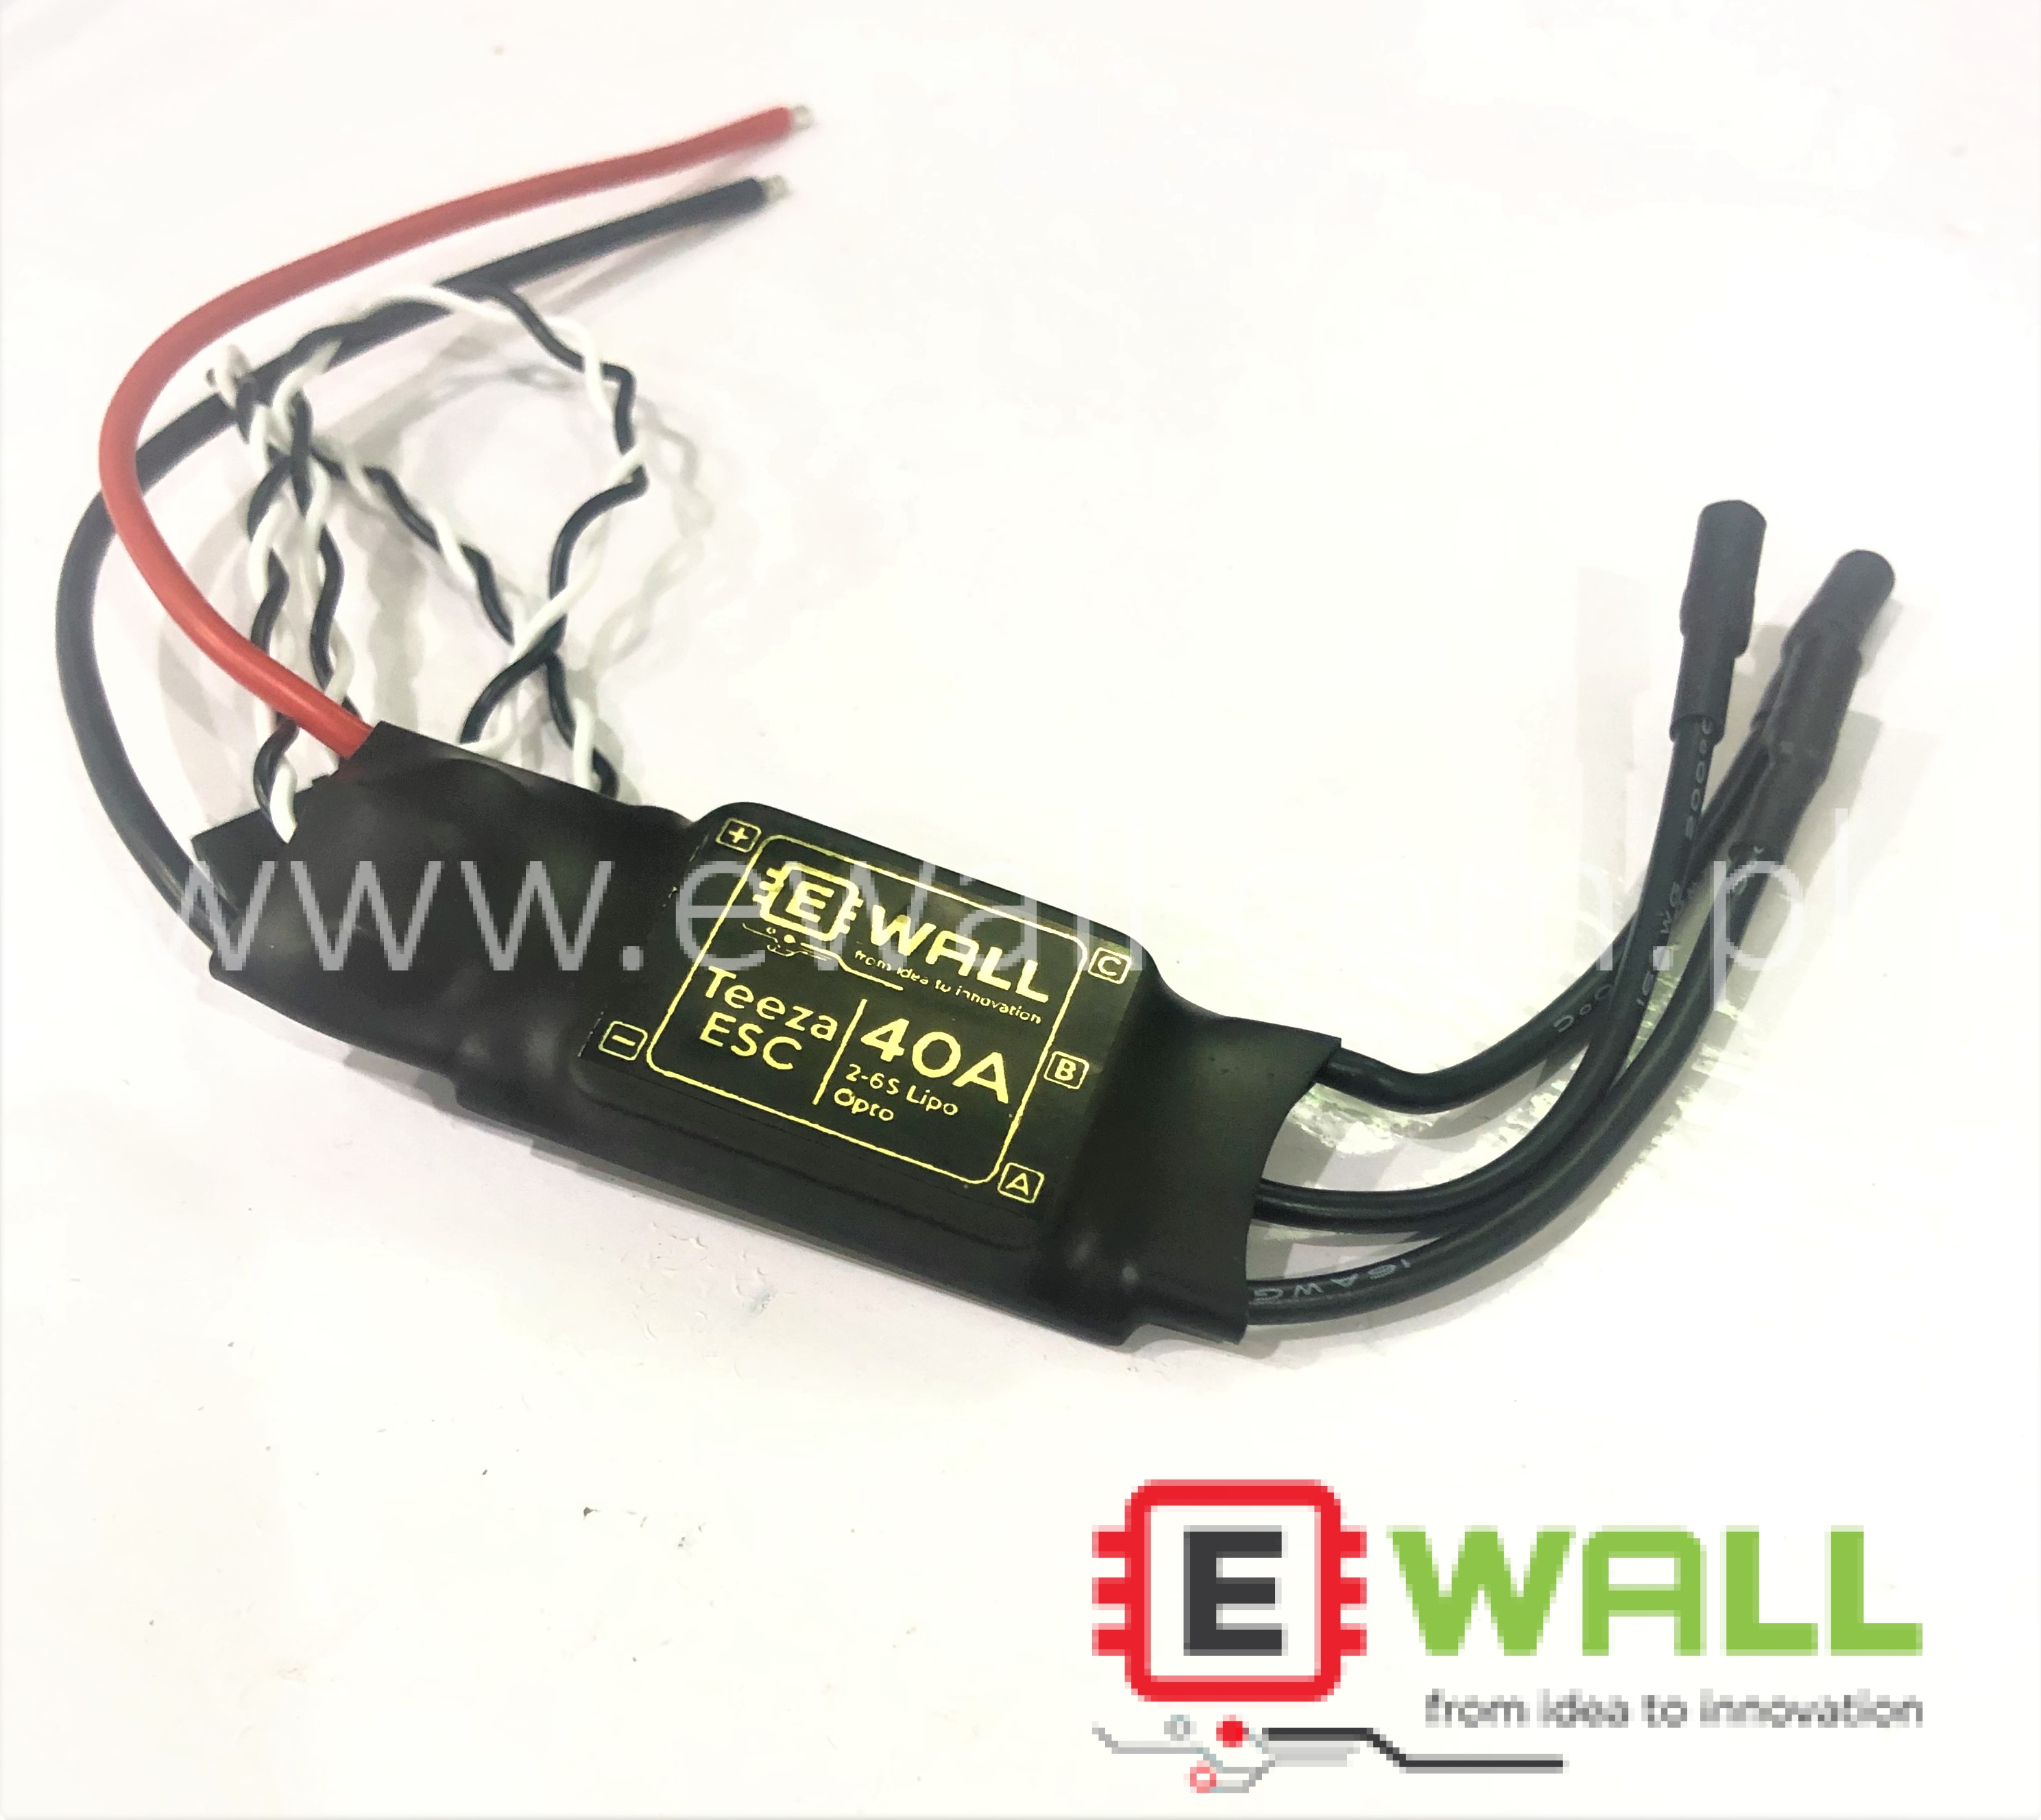 EWALL Teeza 40A Brushless Speed Controller ESC 2-6S Opto